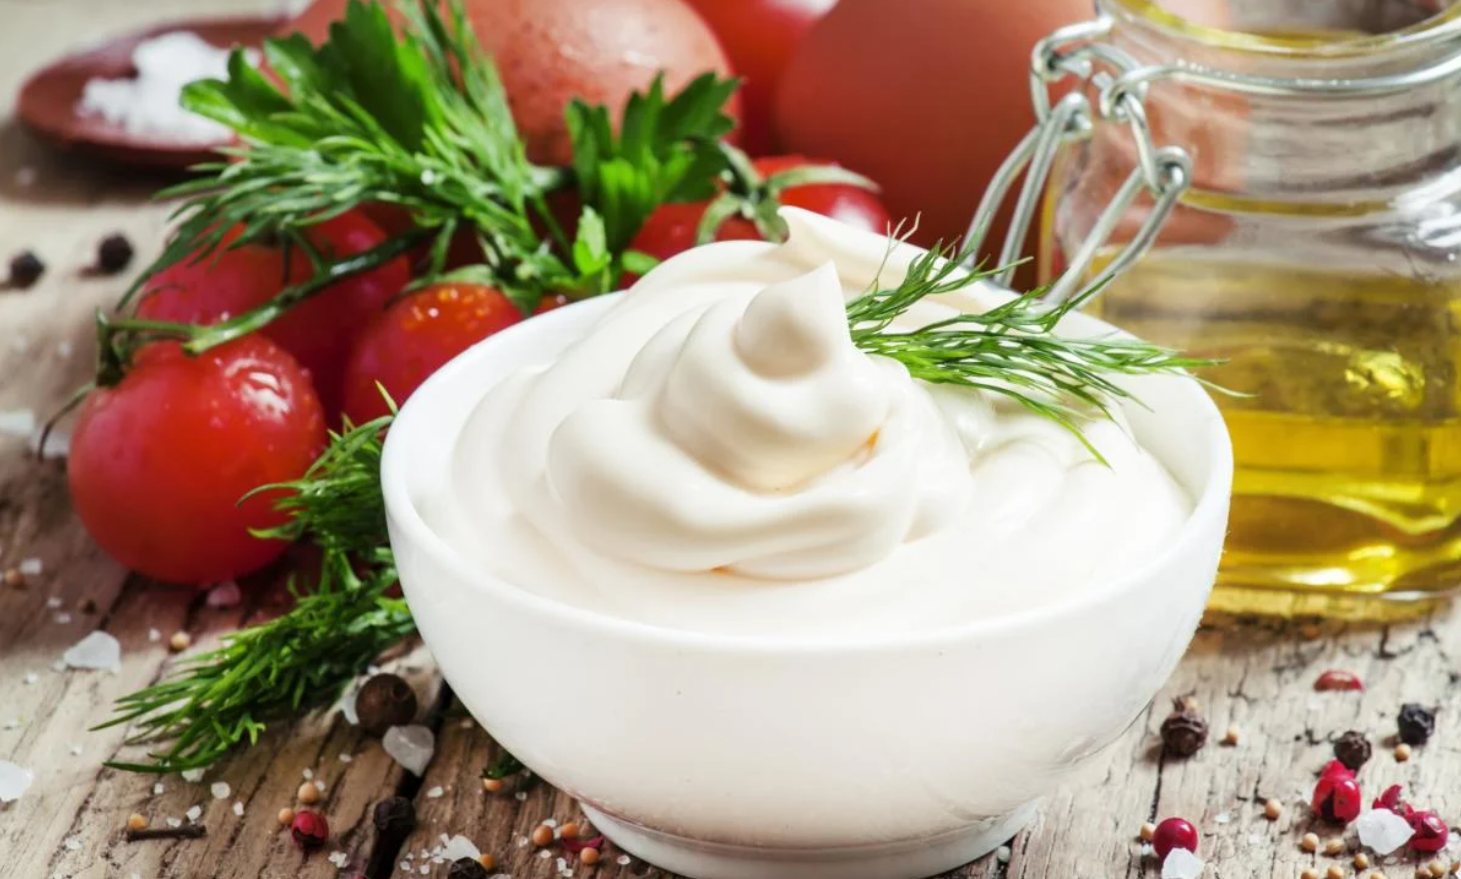 The secrets of making homemade mayonnaise